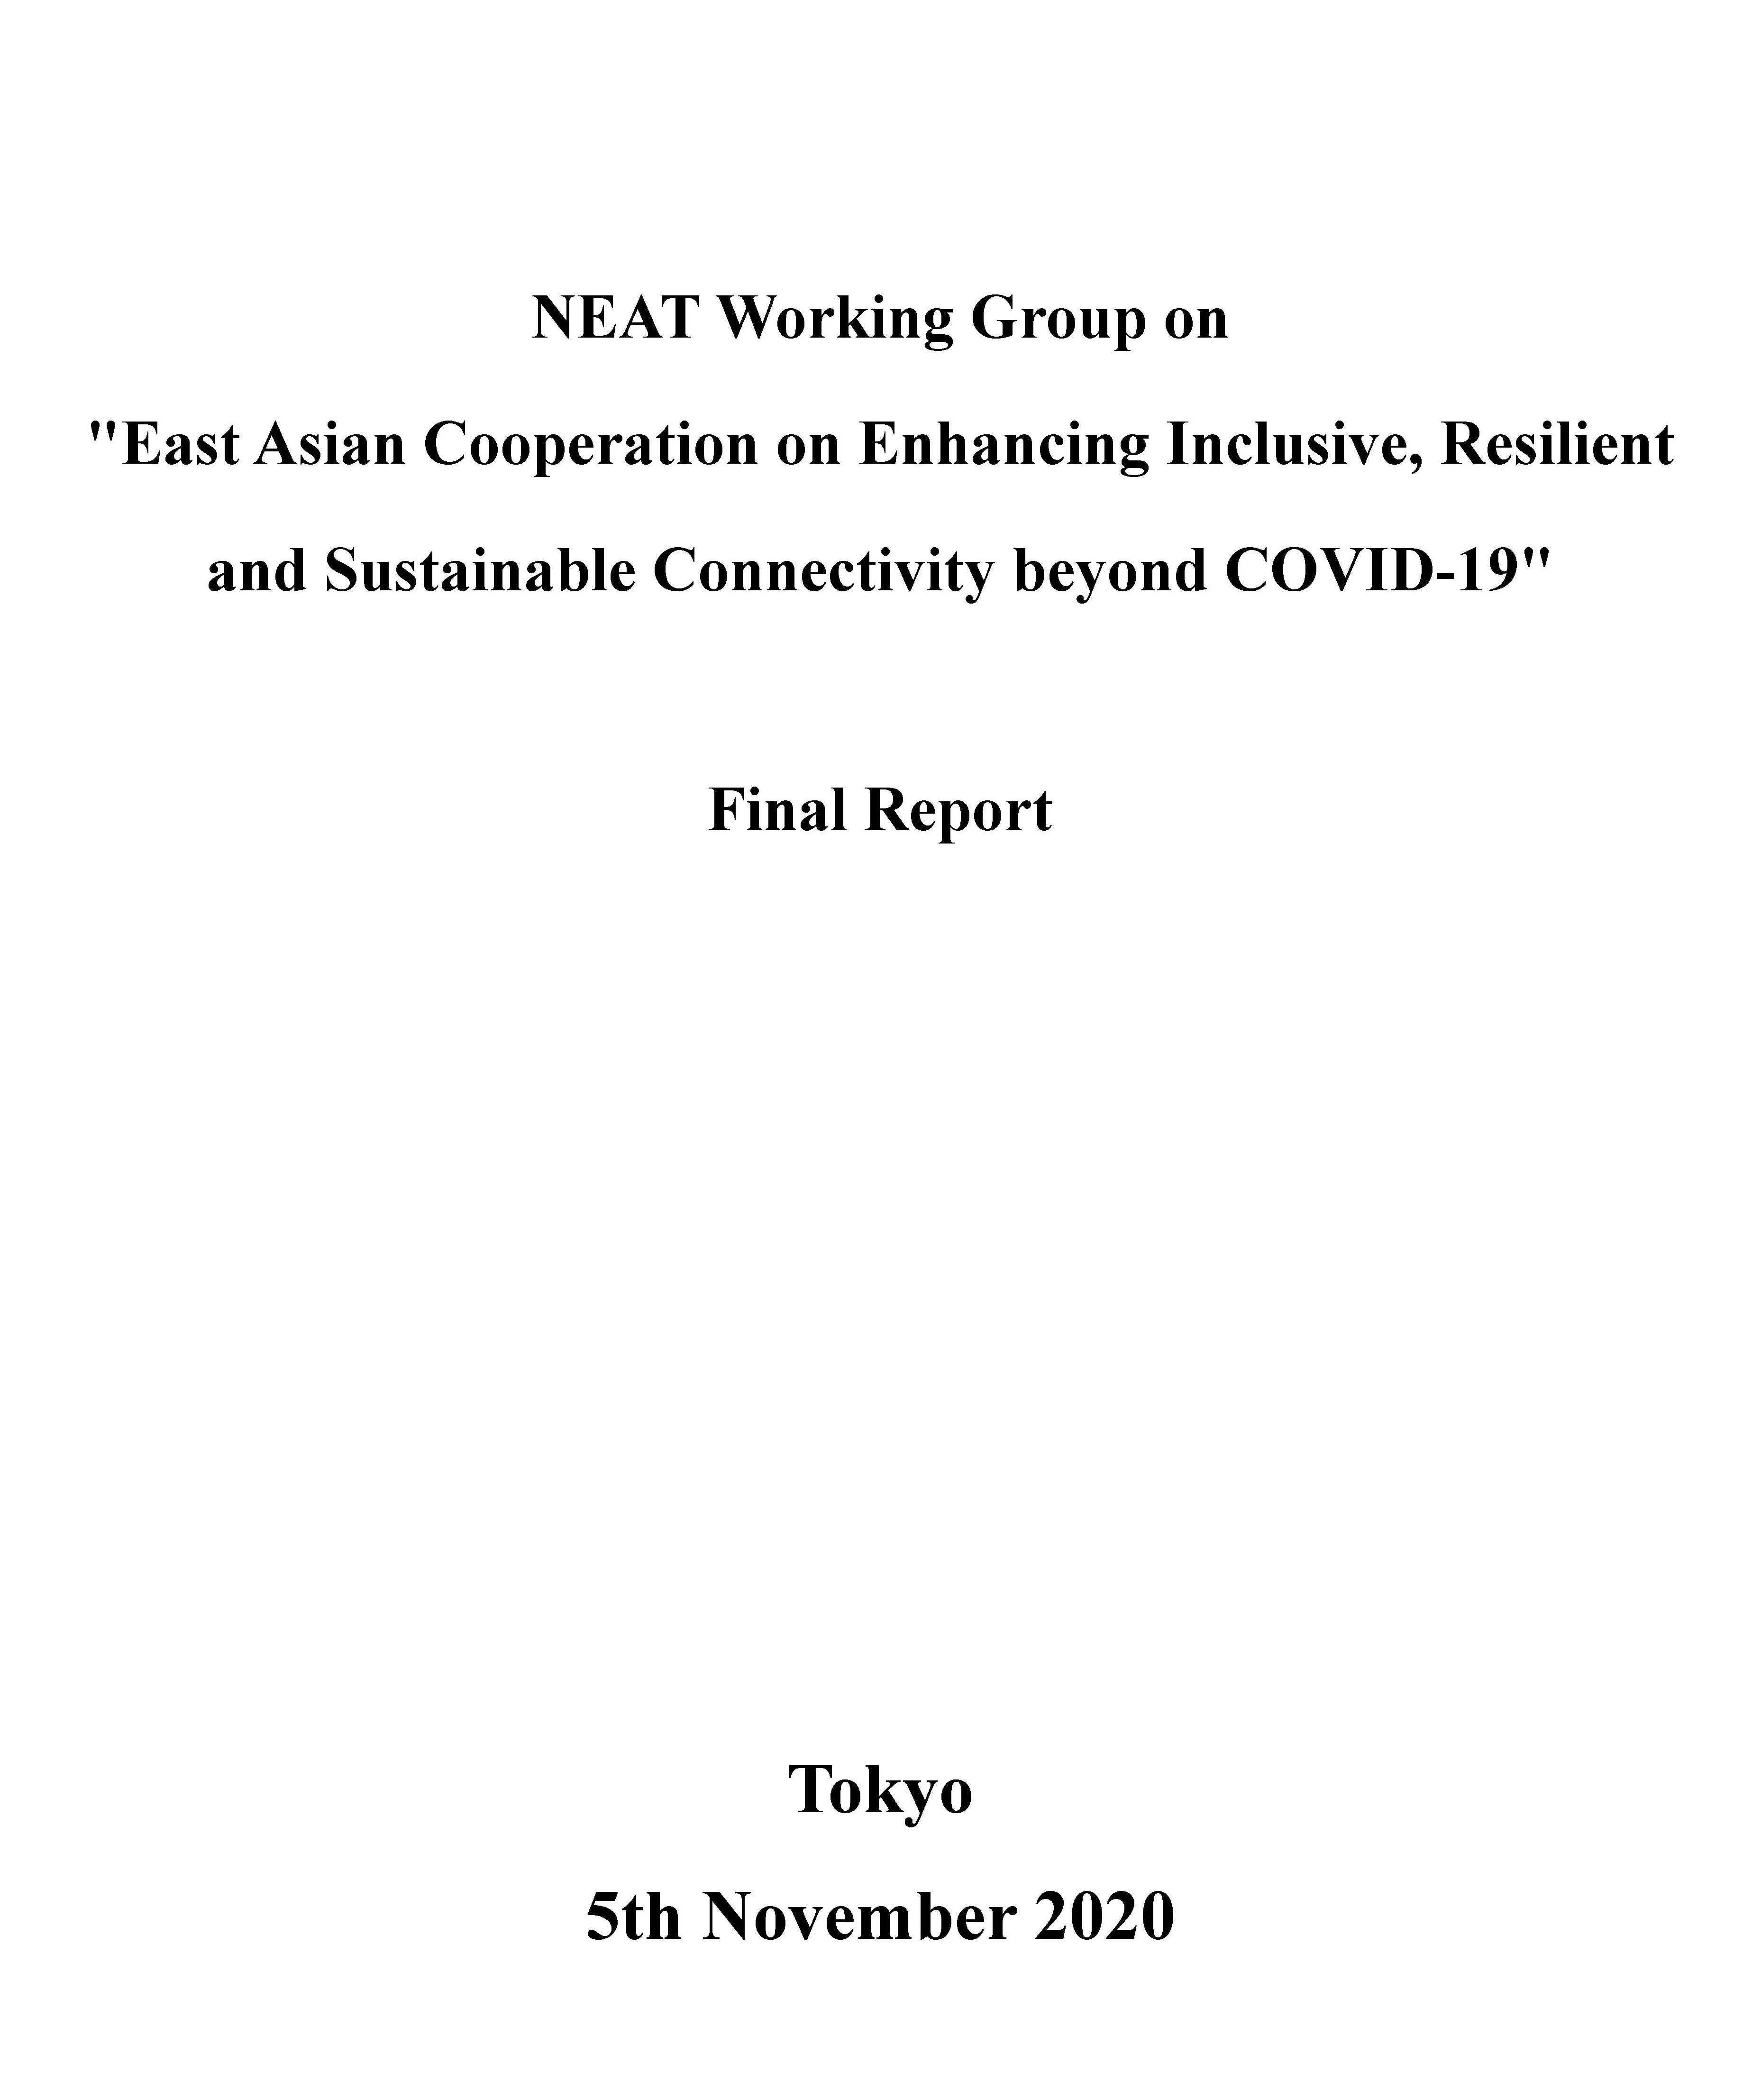 NEAT 2020 Final Report